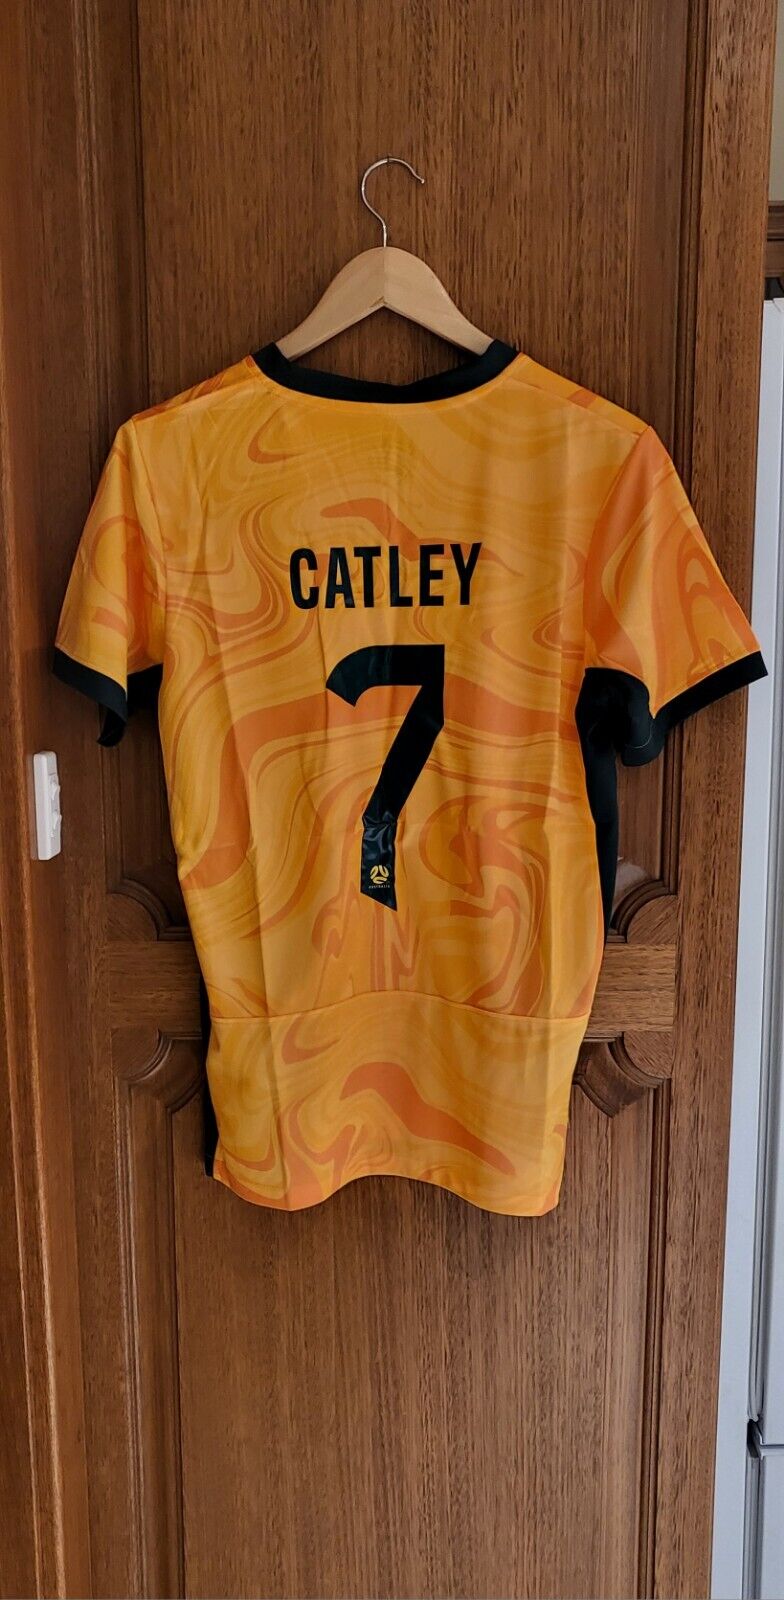 Matildas jersey, Catley #7, small.